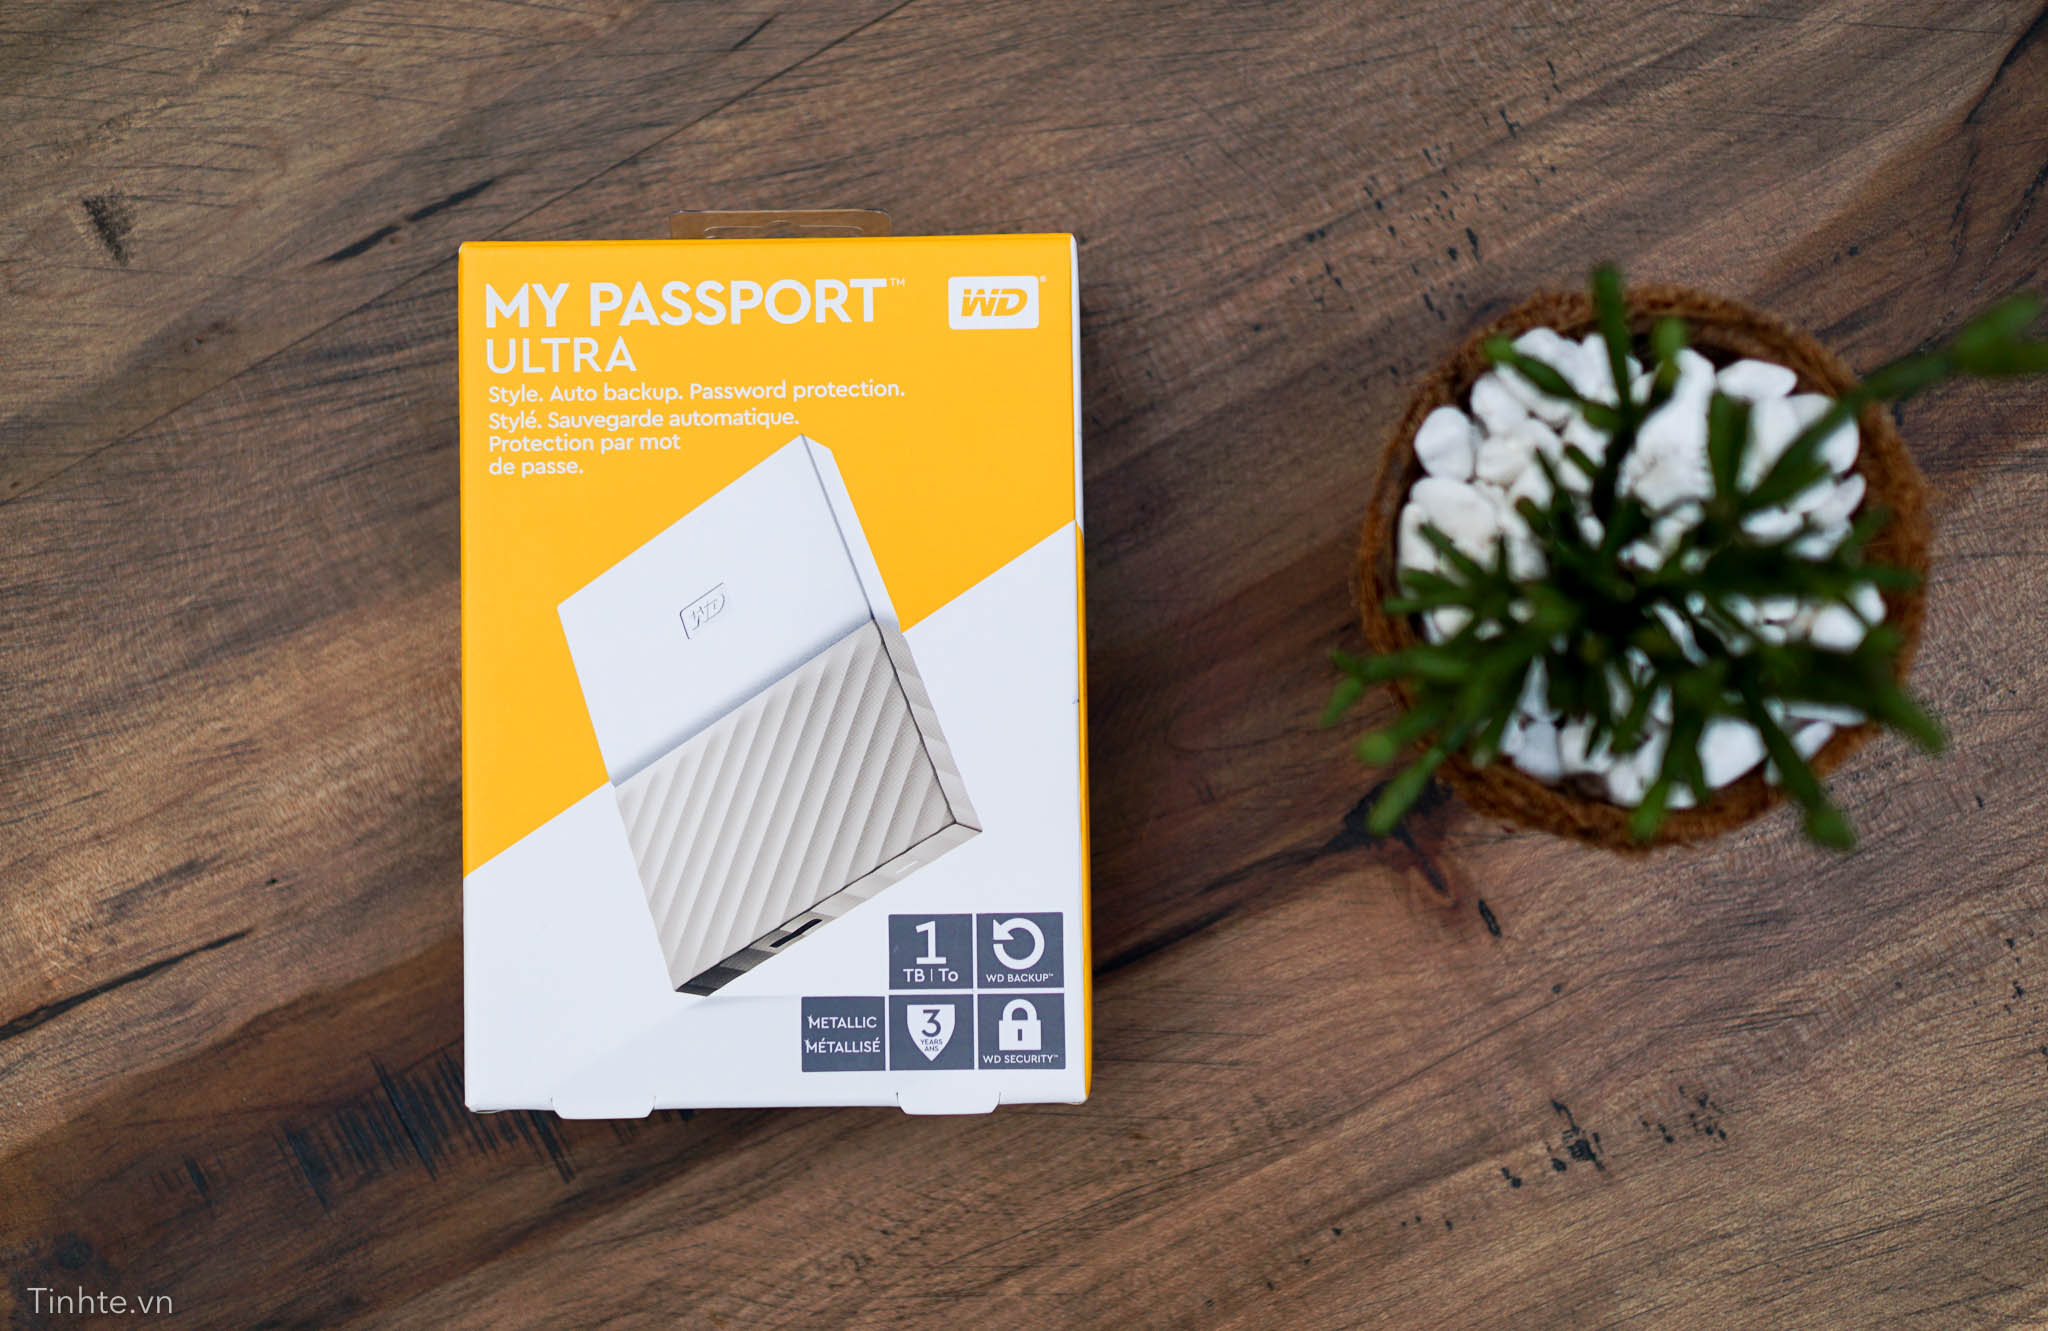 tinhte-wd-my-passport-ultra-white-5.jpg